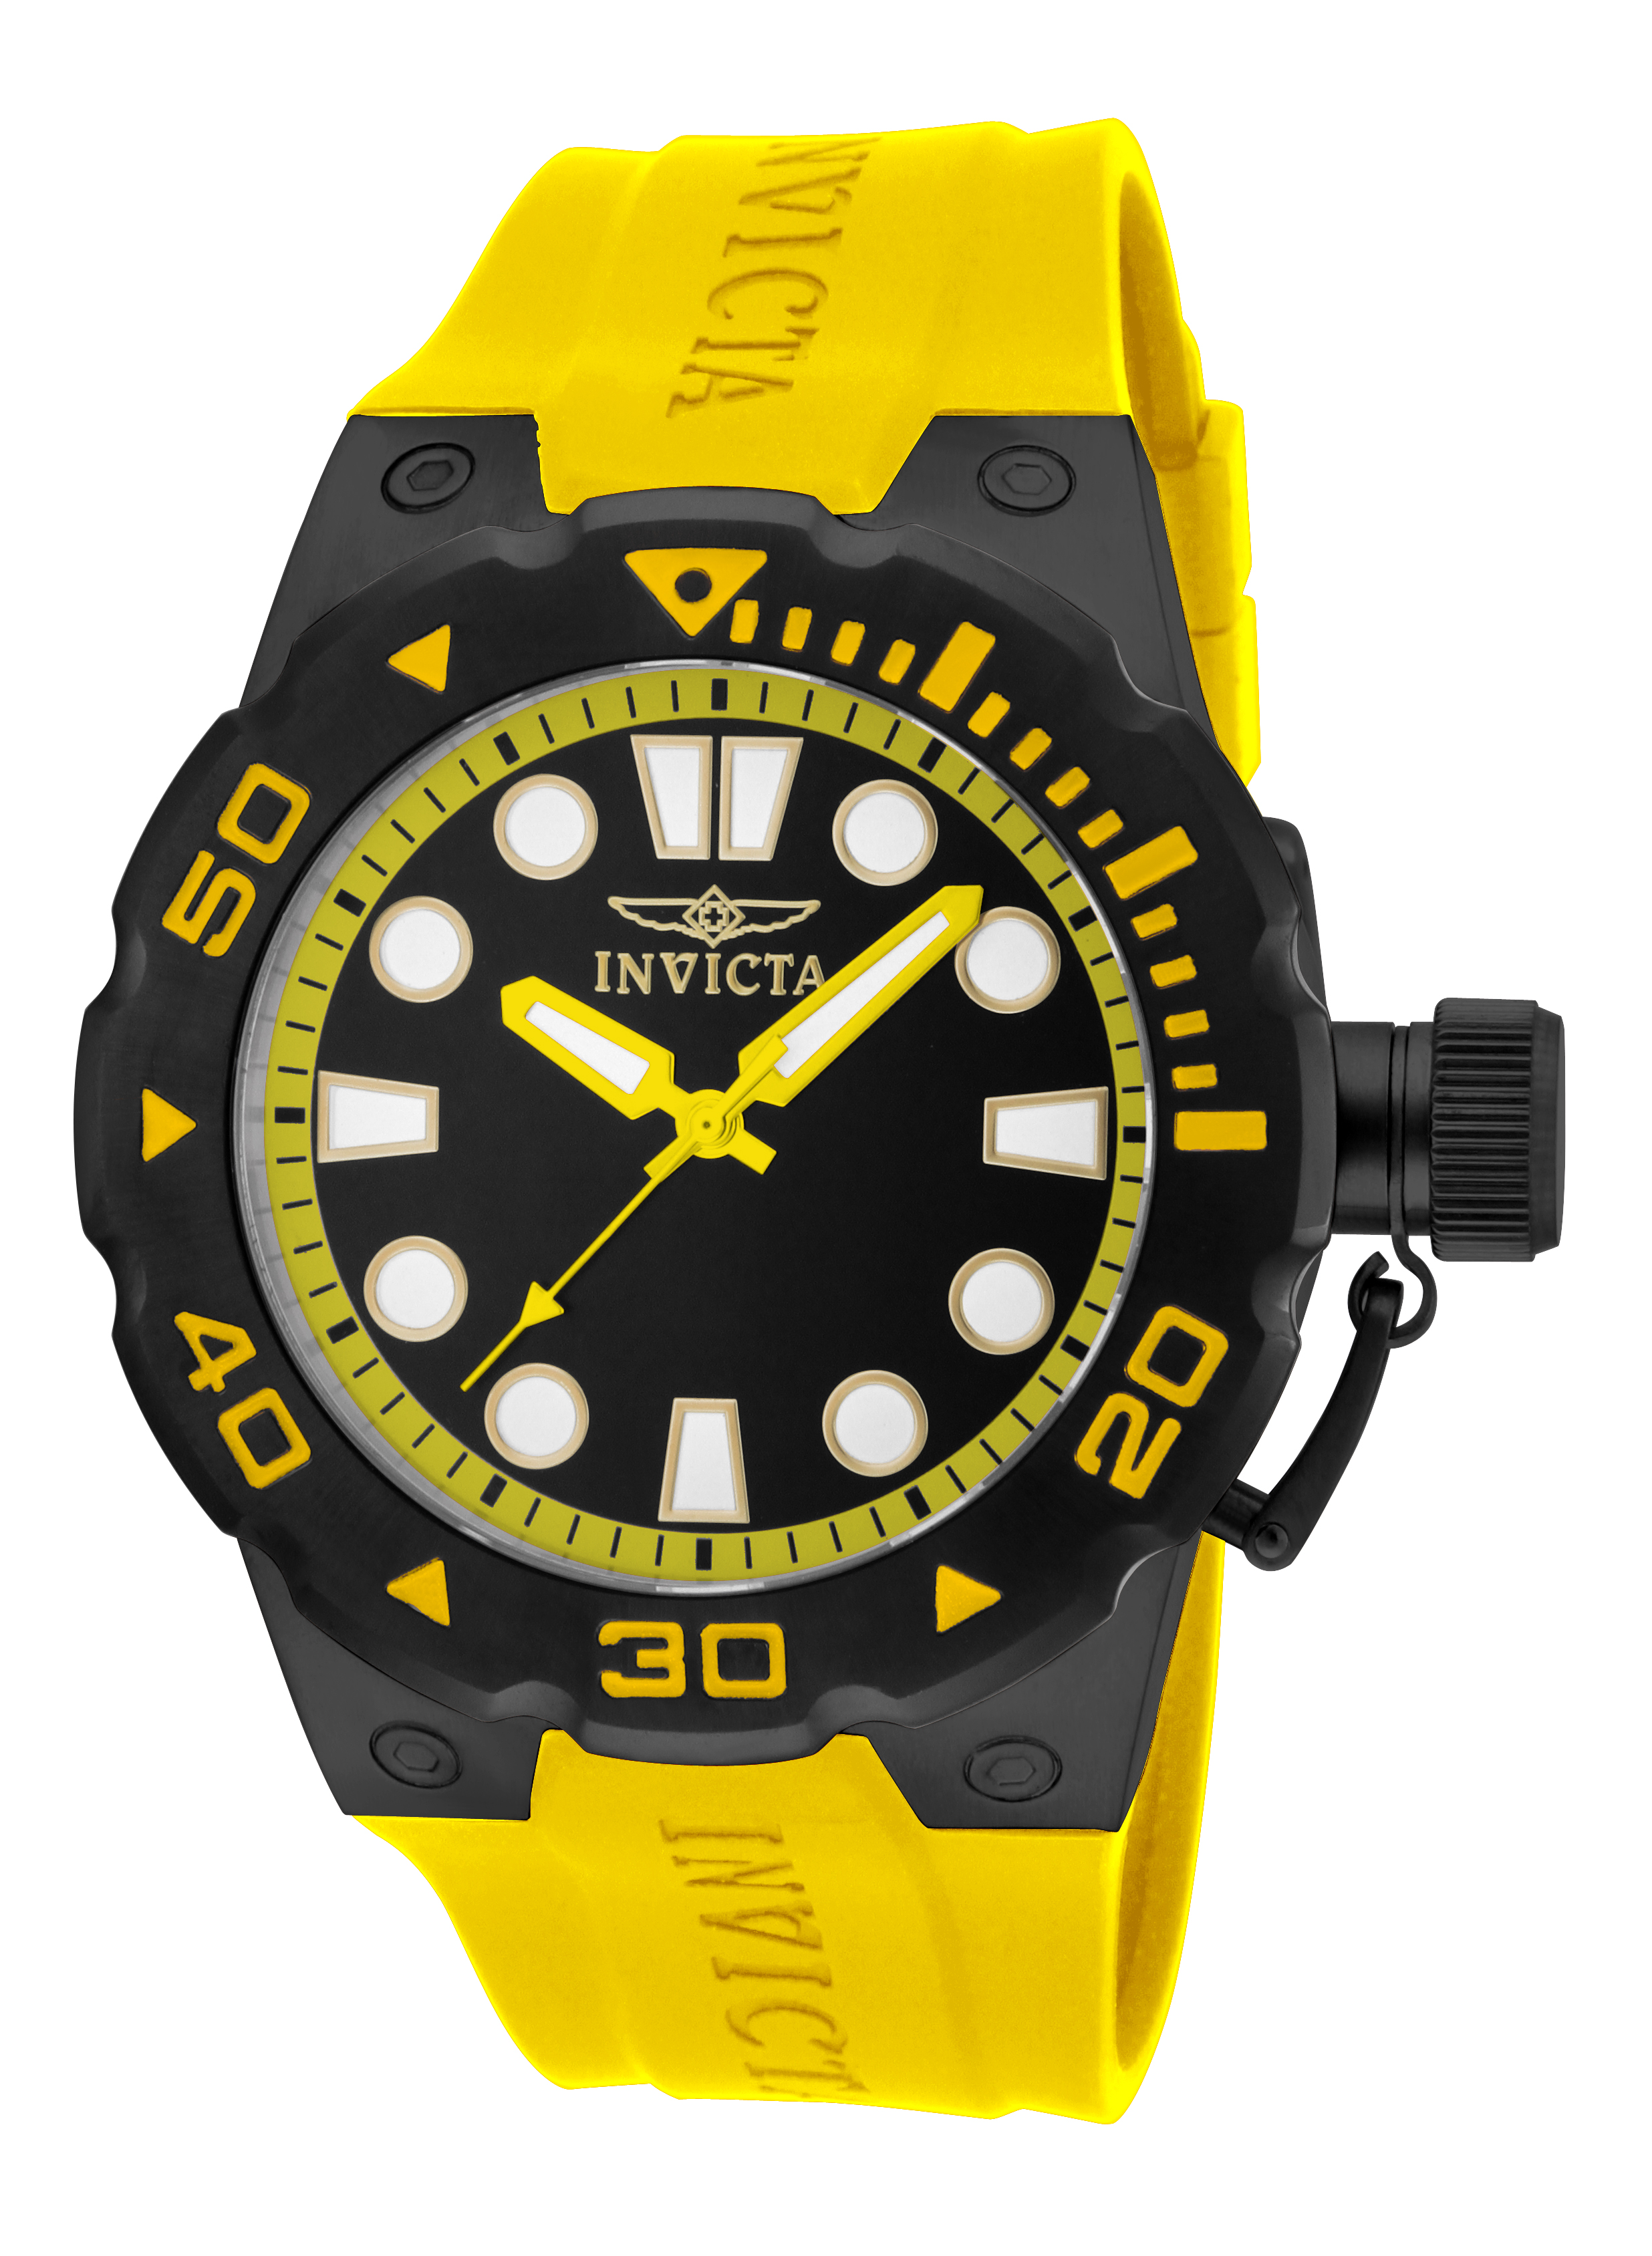 Invicta Pro Diver Men's Watch - 51mm, Yellow (16138)